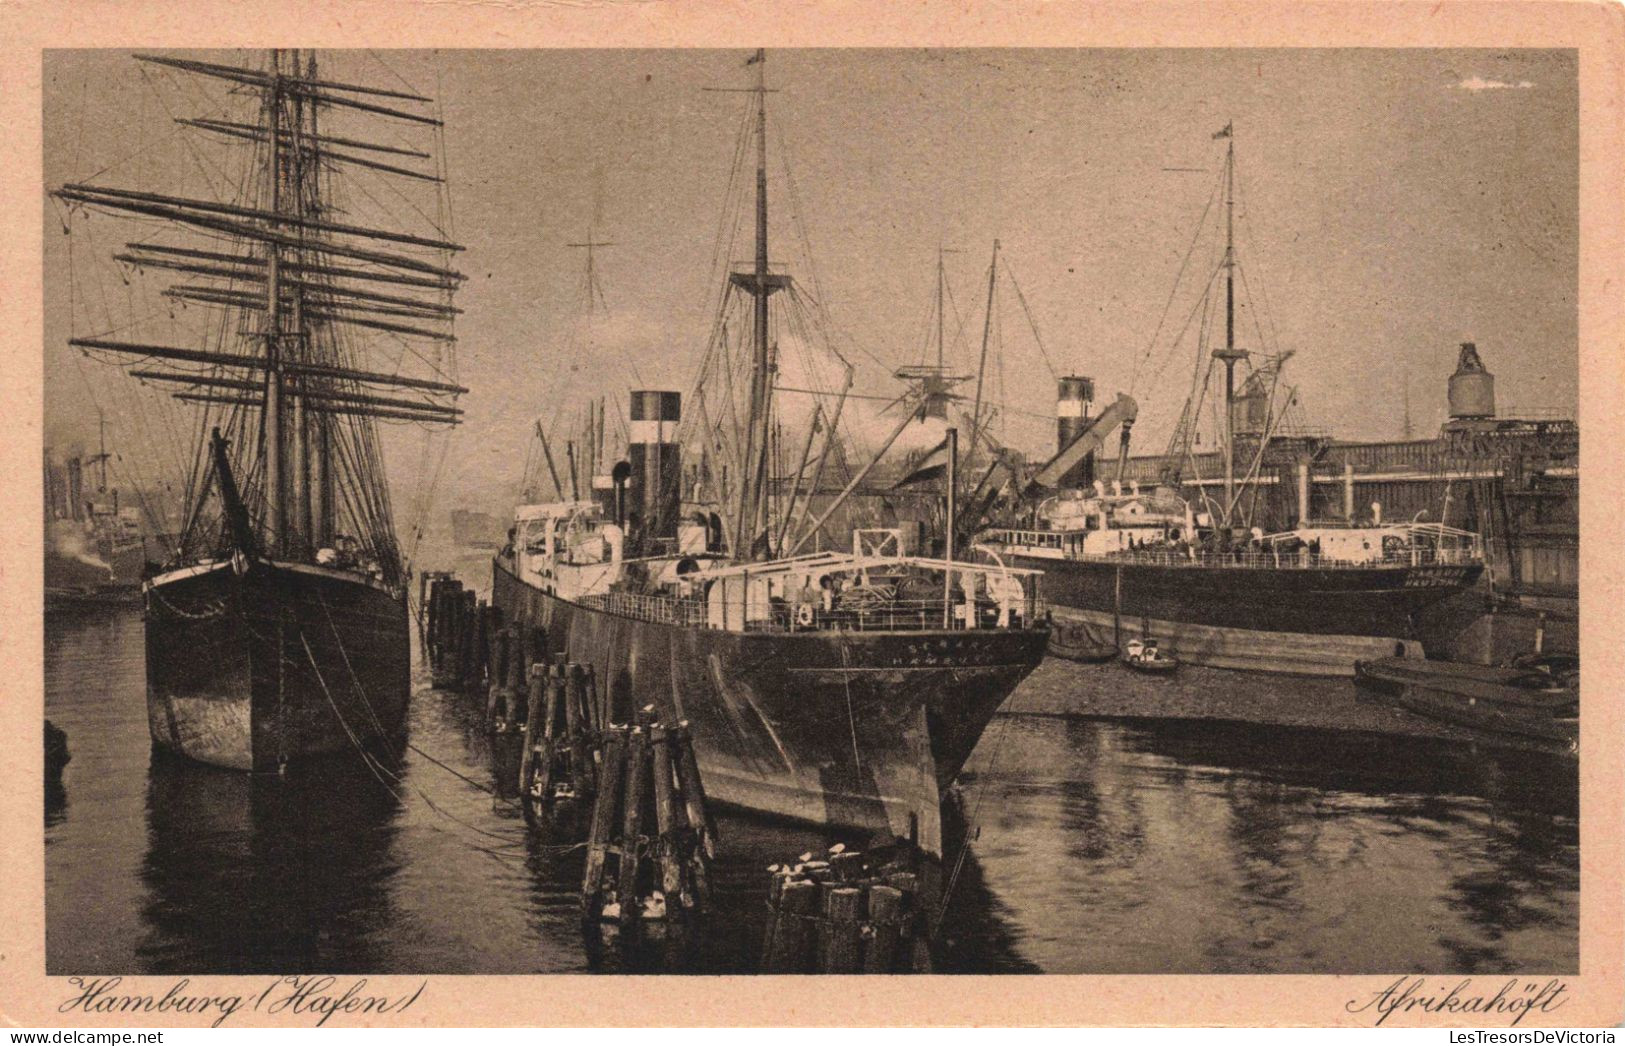 TRANSPORT - Bateaux - Hamburg Hafen - Carte Postale Ancienne - Commercio